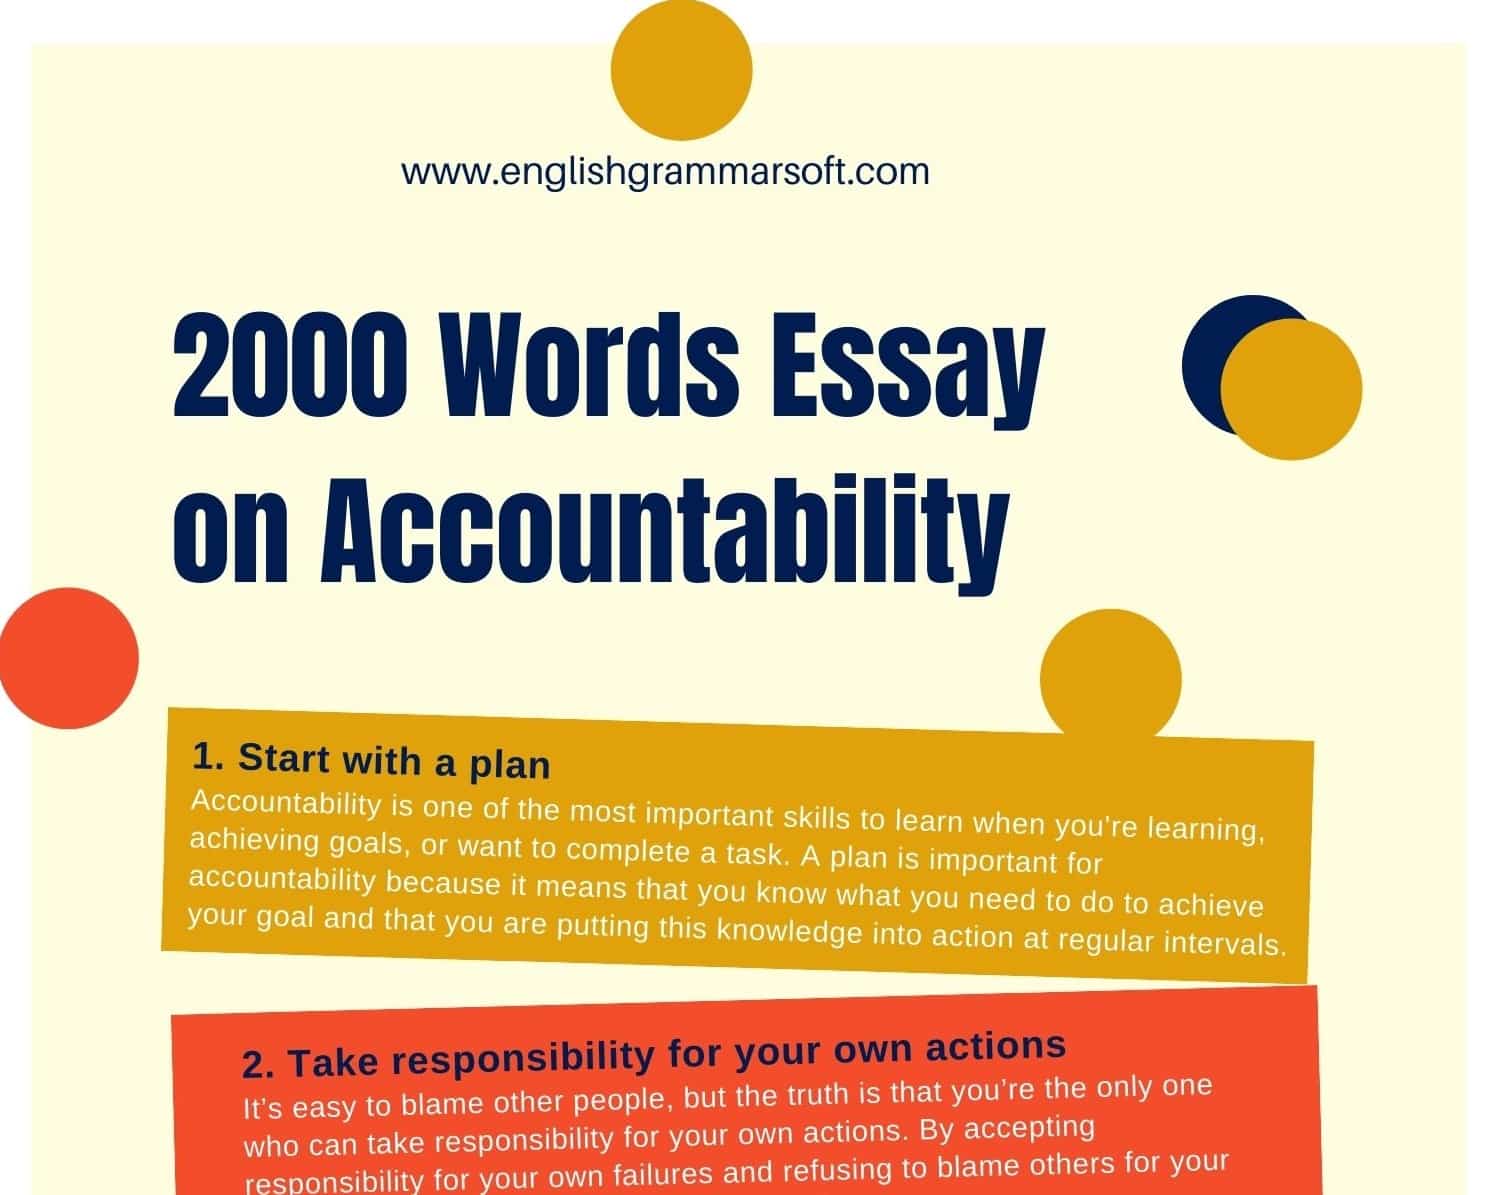 Essay on Accountability